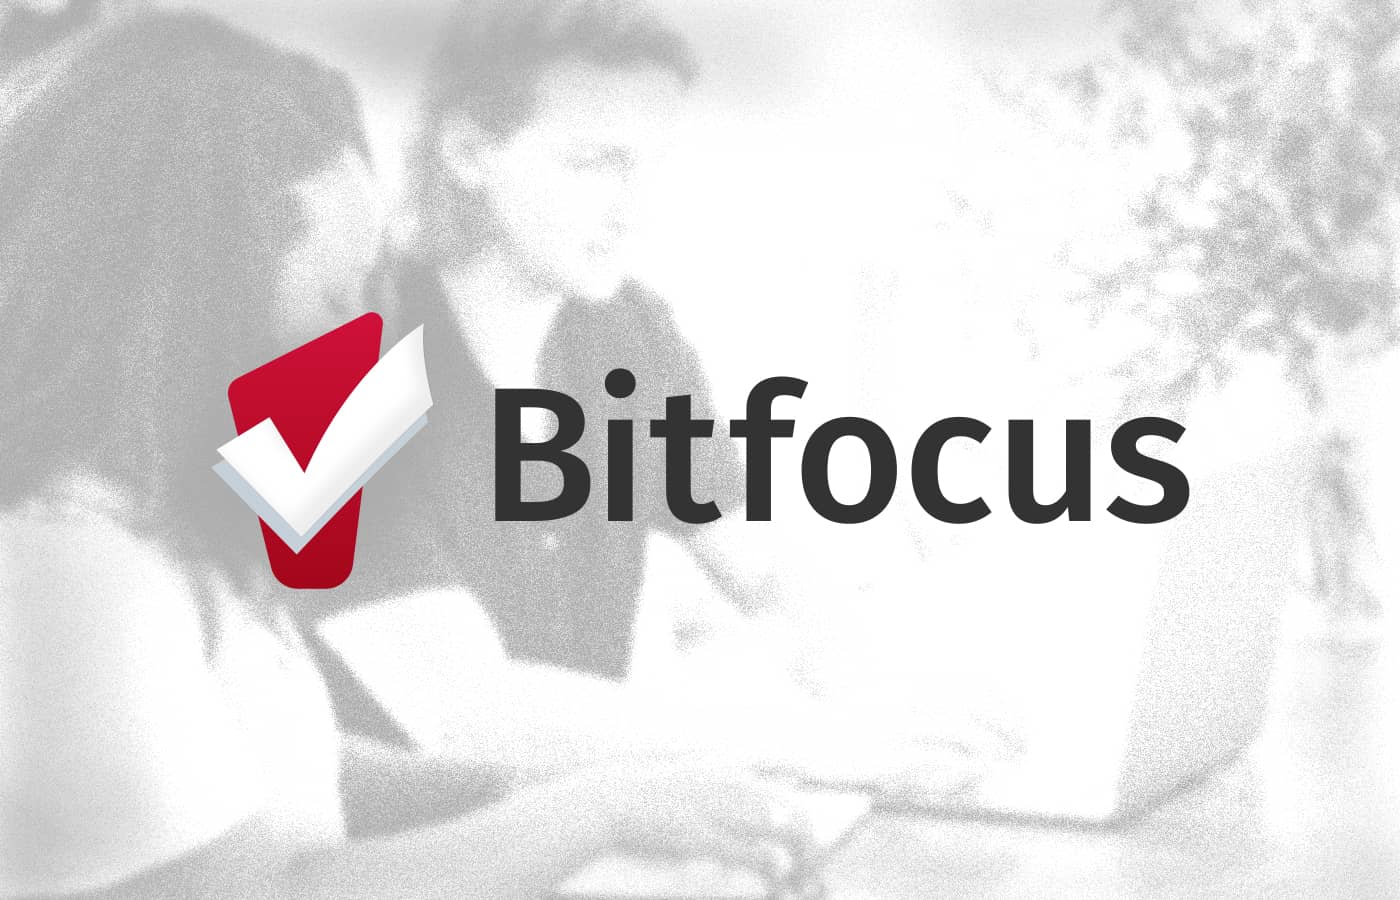 Bitfocus logo on grainy background